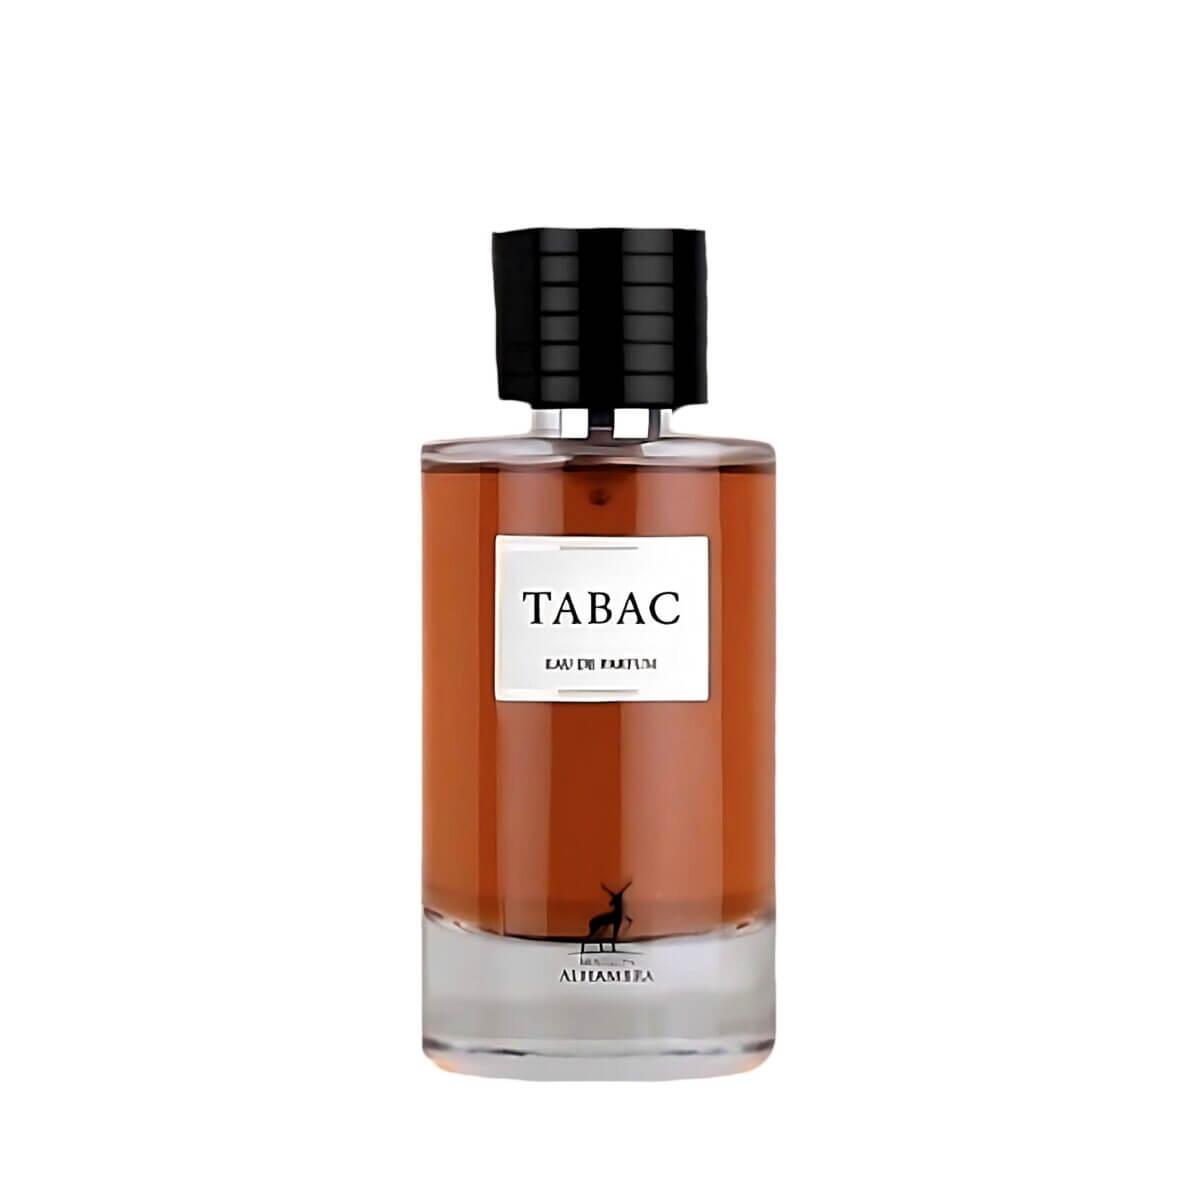 Tabac Perfume Eau De Parfum 100Ml By Maison Alhambra Lattafa (Inspired By Christian Dior'S Tobacolor)